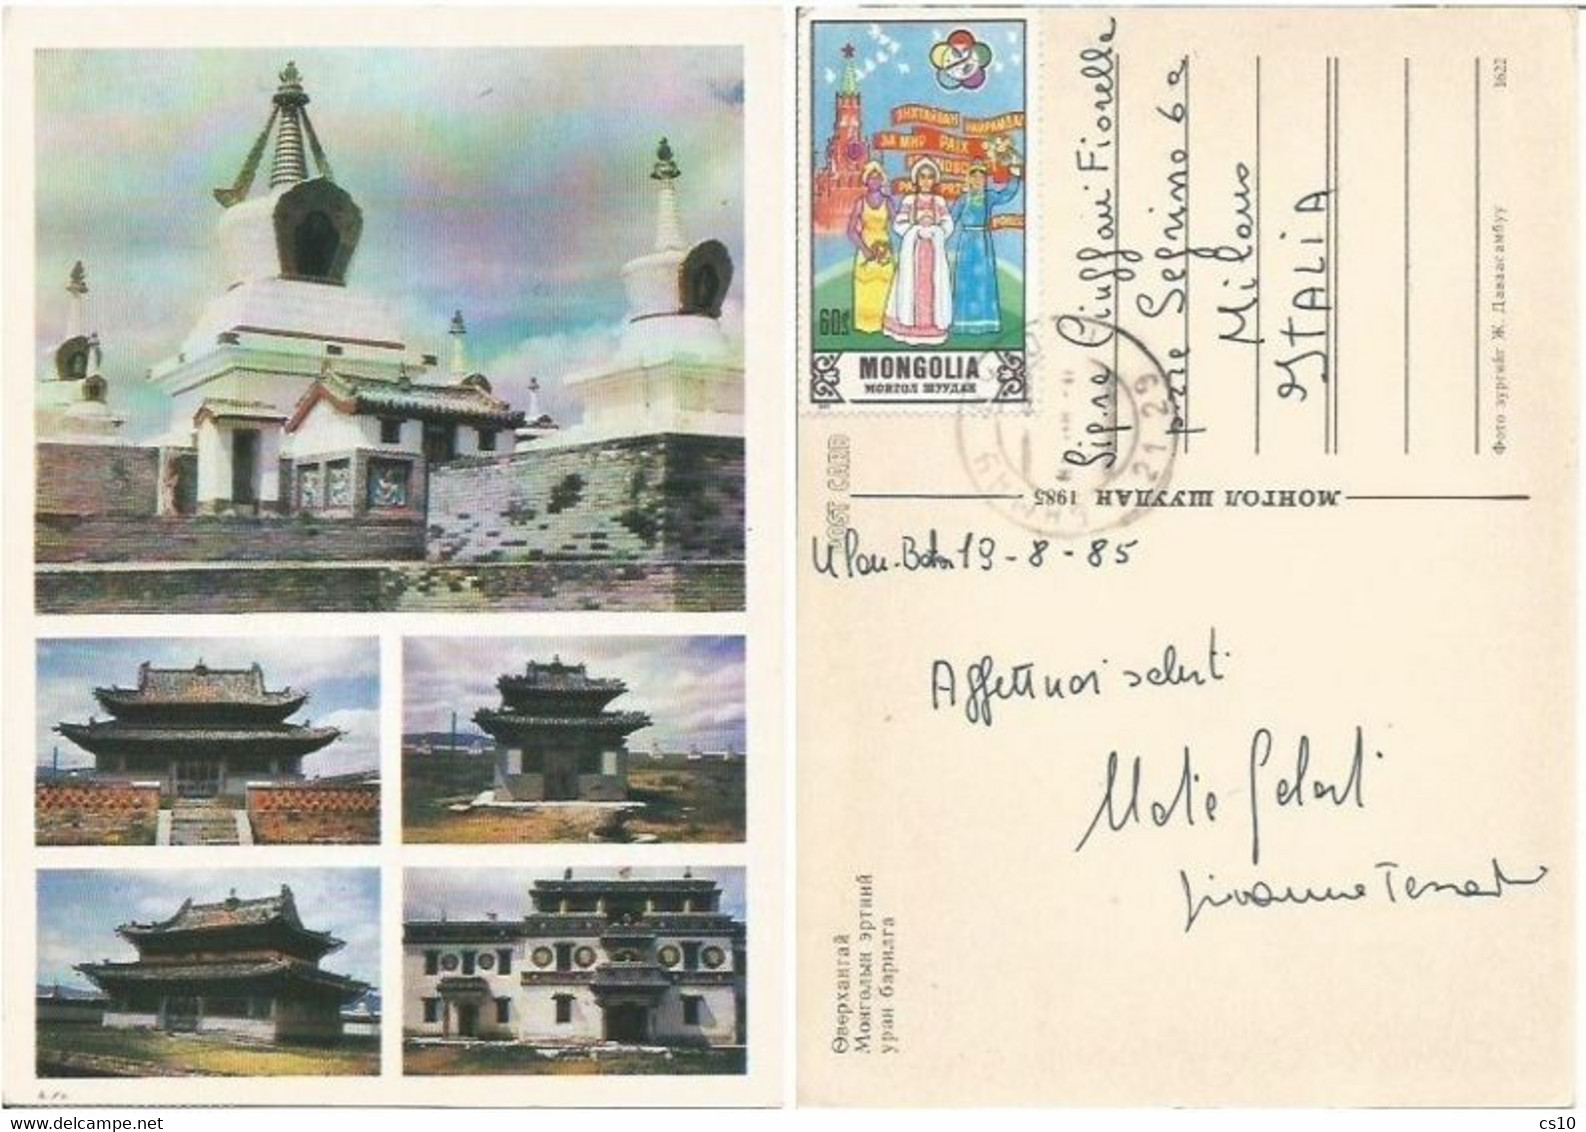 Mongolia Pagodas Of Monastery In Ulan Baatar Pcard 19aug1985 With 1 Stamp - Mongolie